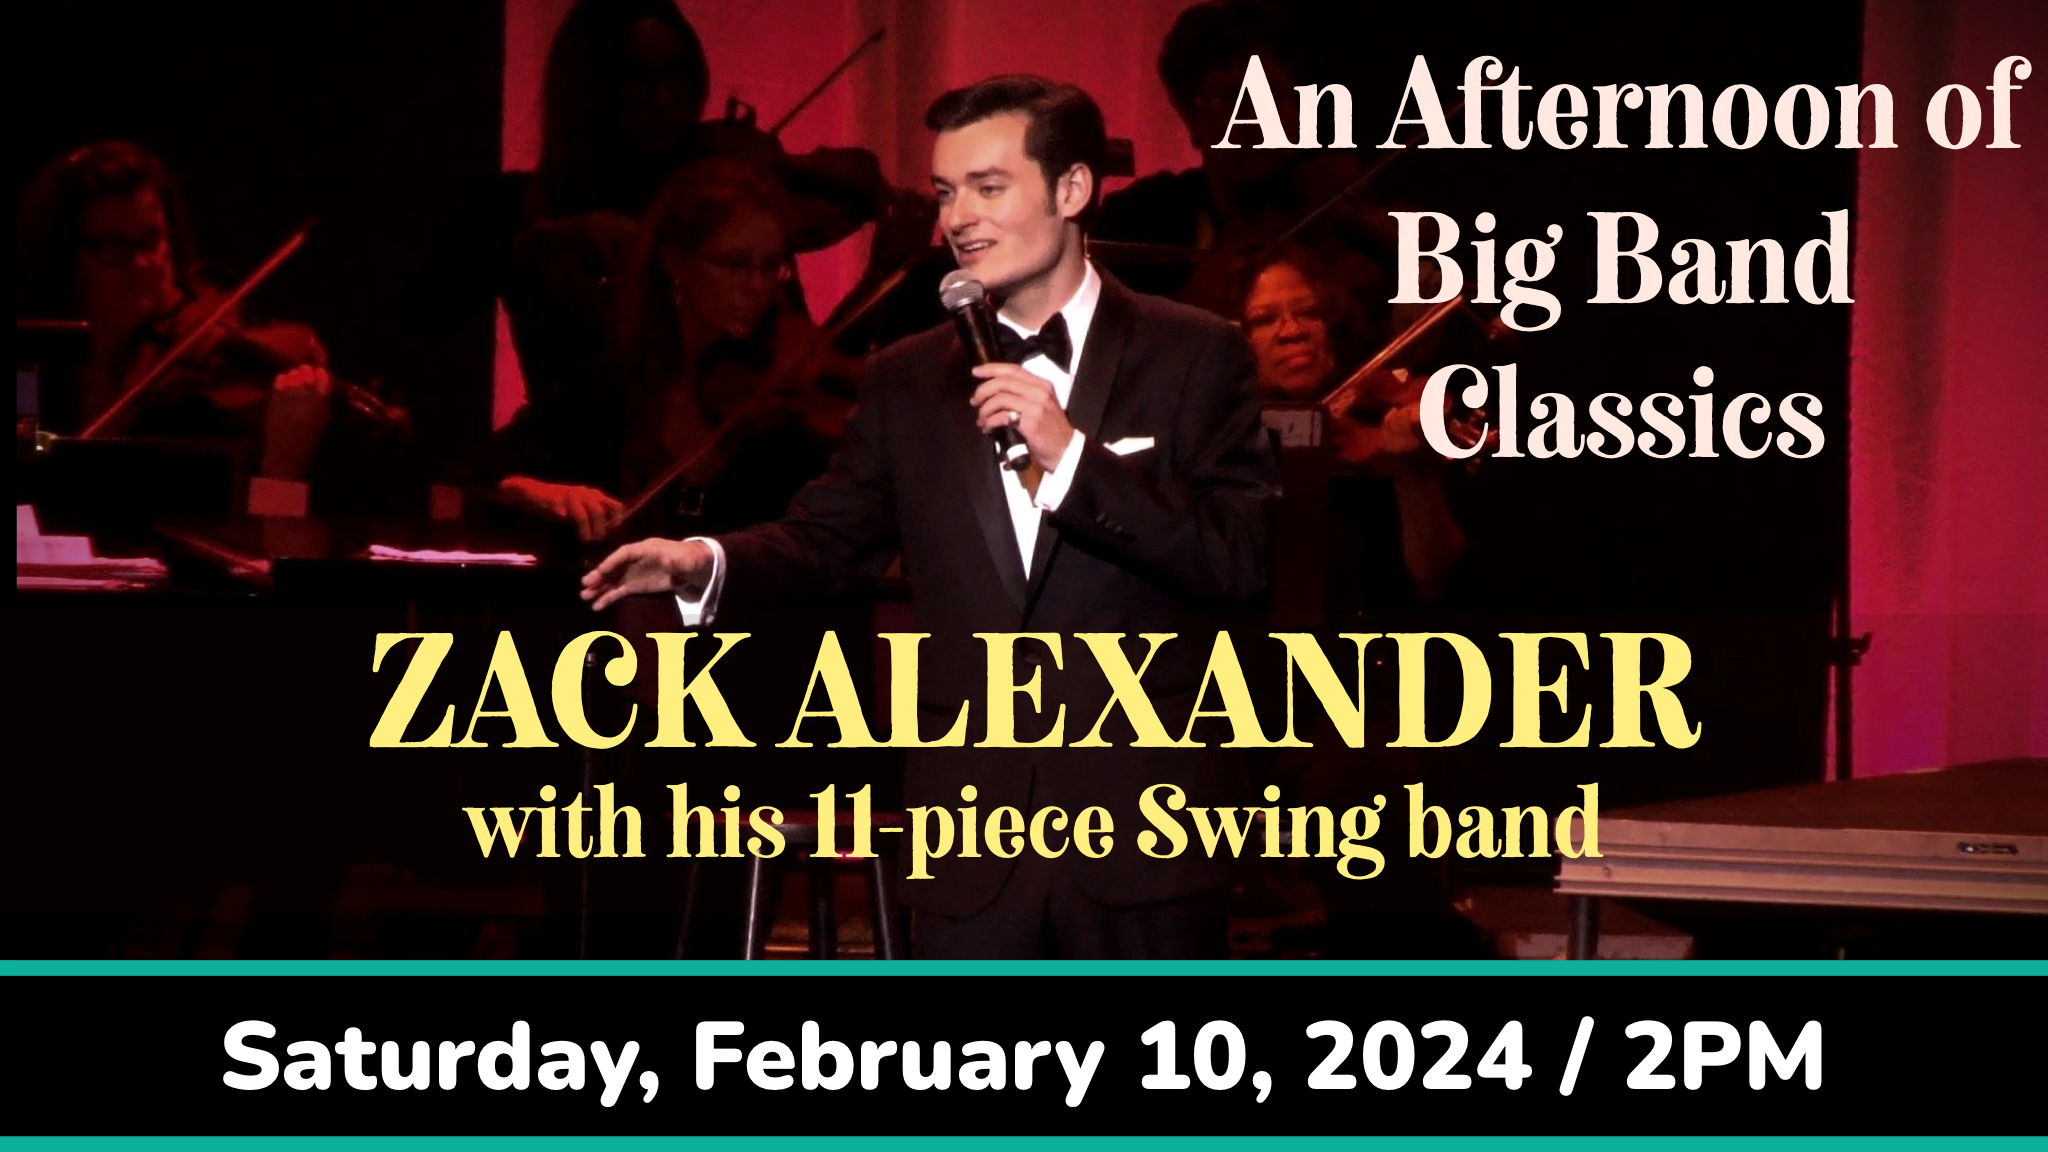 Zack Alexander: An Evening of Big Band Classics